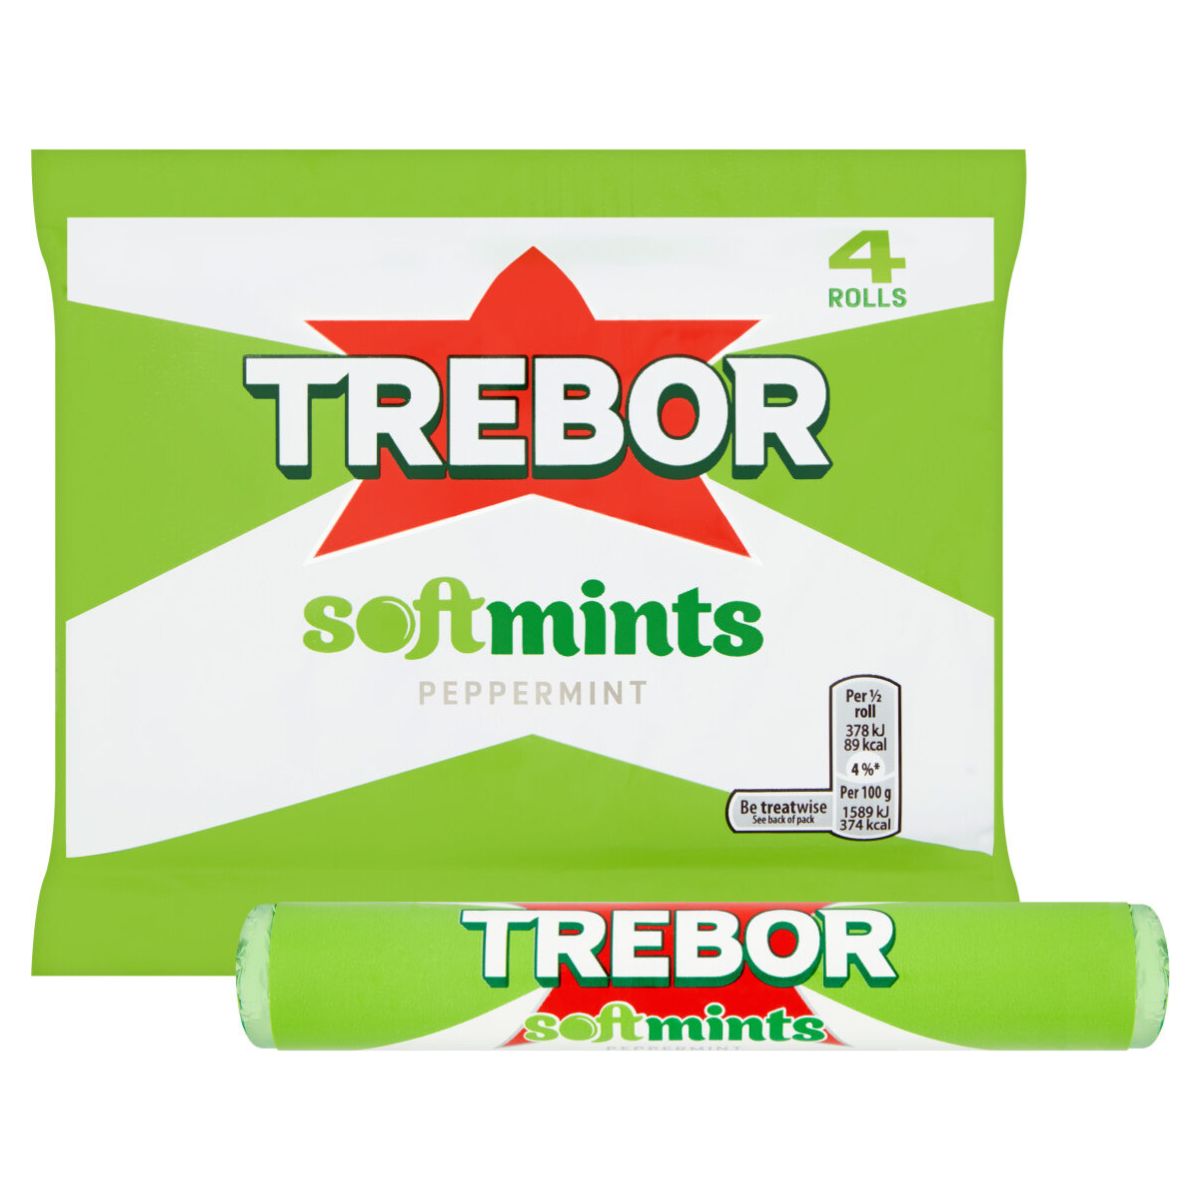 Trebor - Softmints peppermint - 4 Rolls soft mints peppermint.